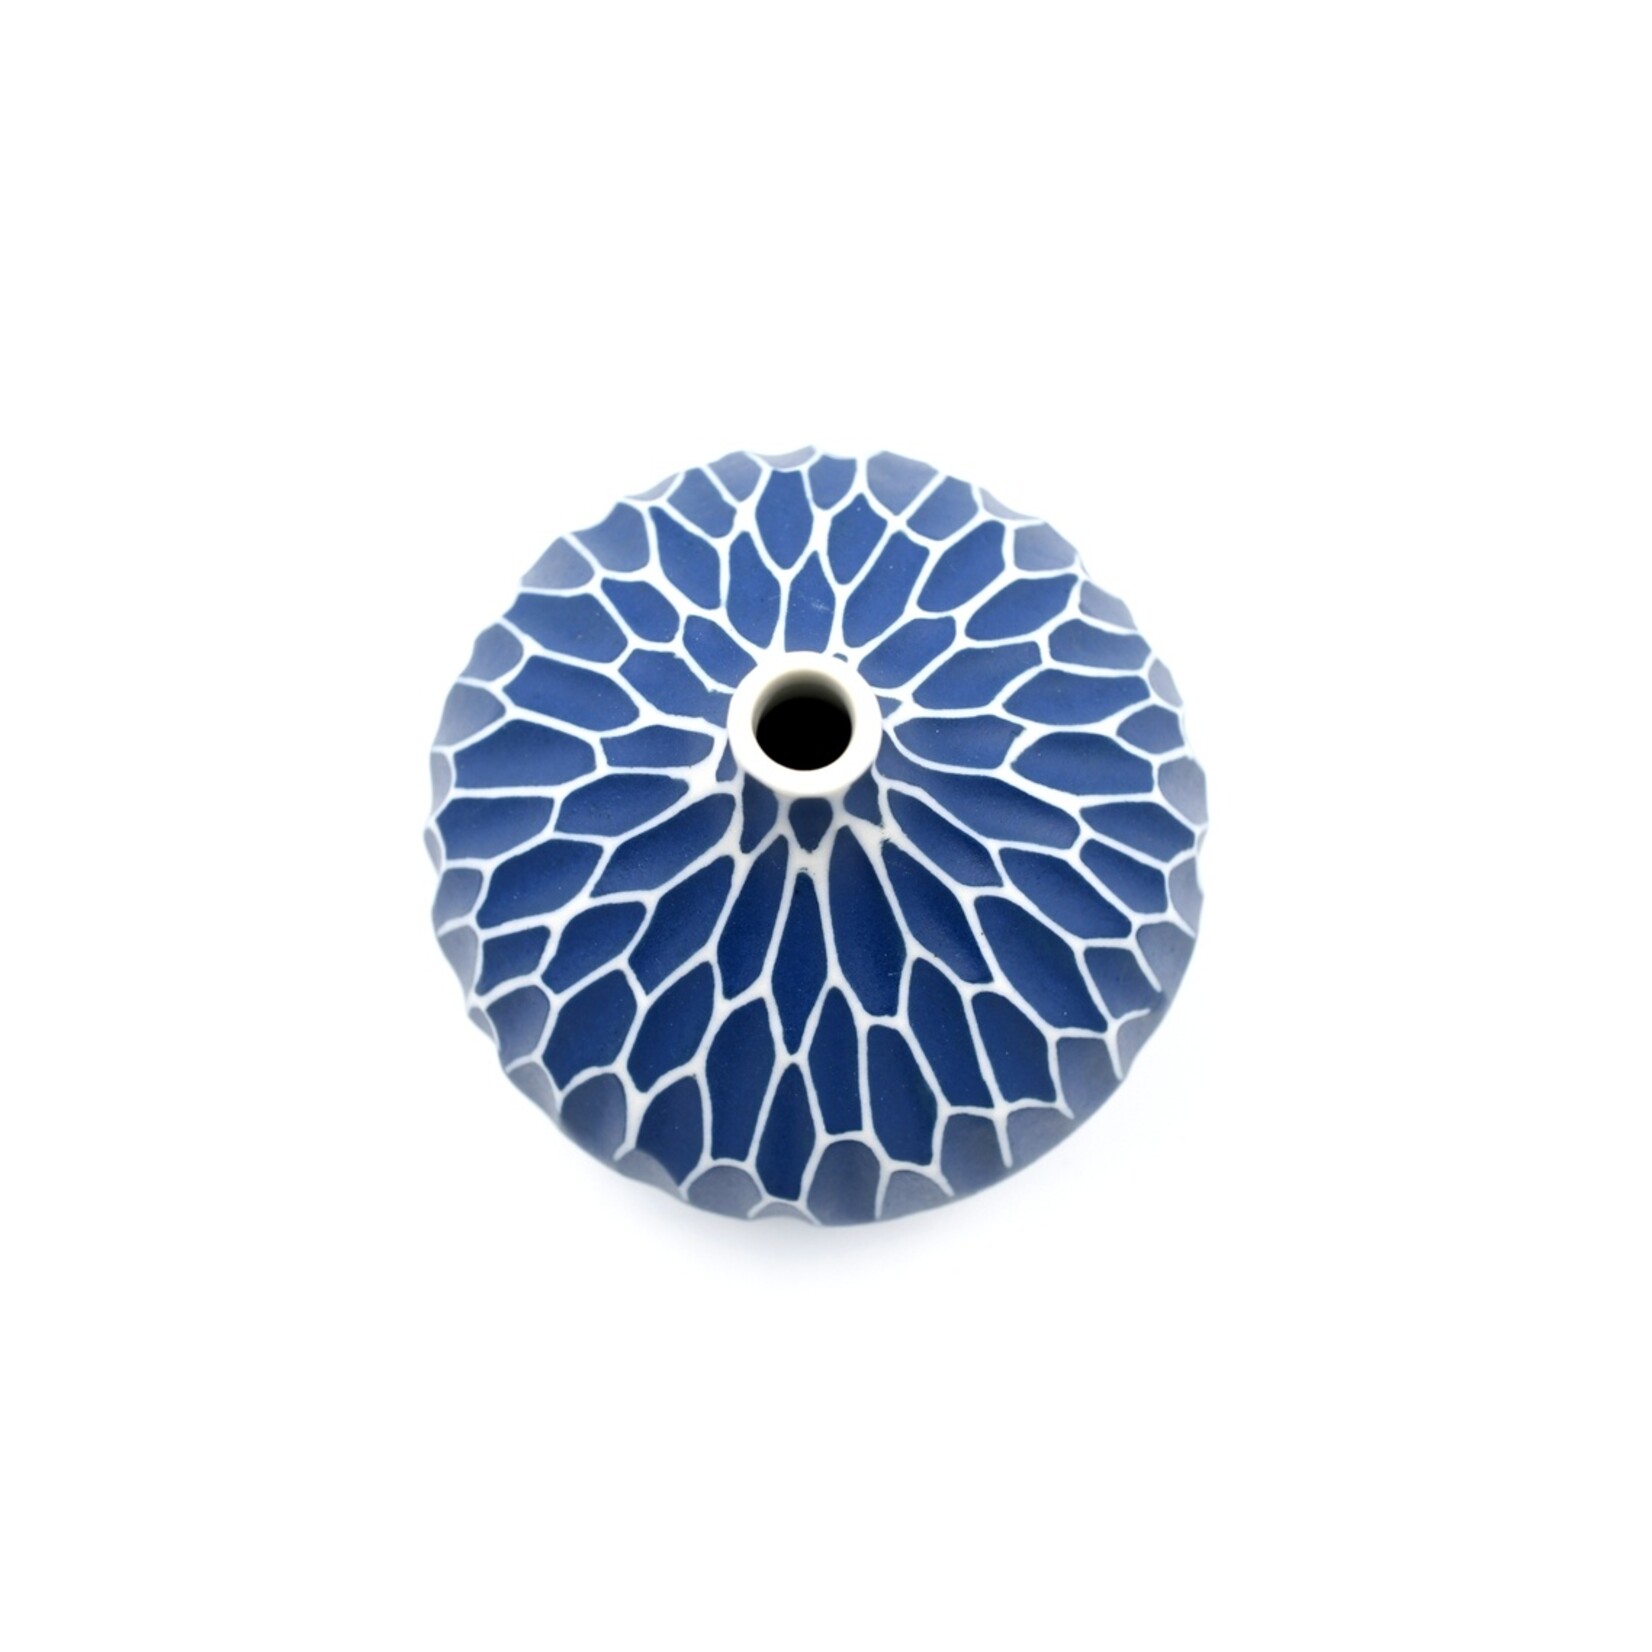 Congo Tiny Porcelain Bud Vase in WO69 Blue